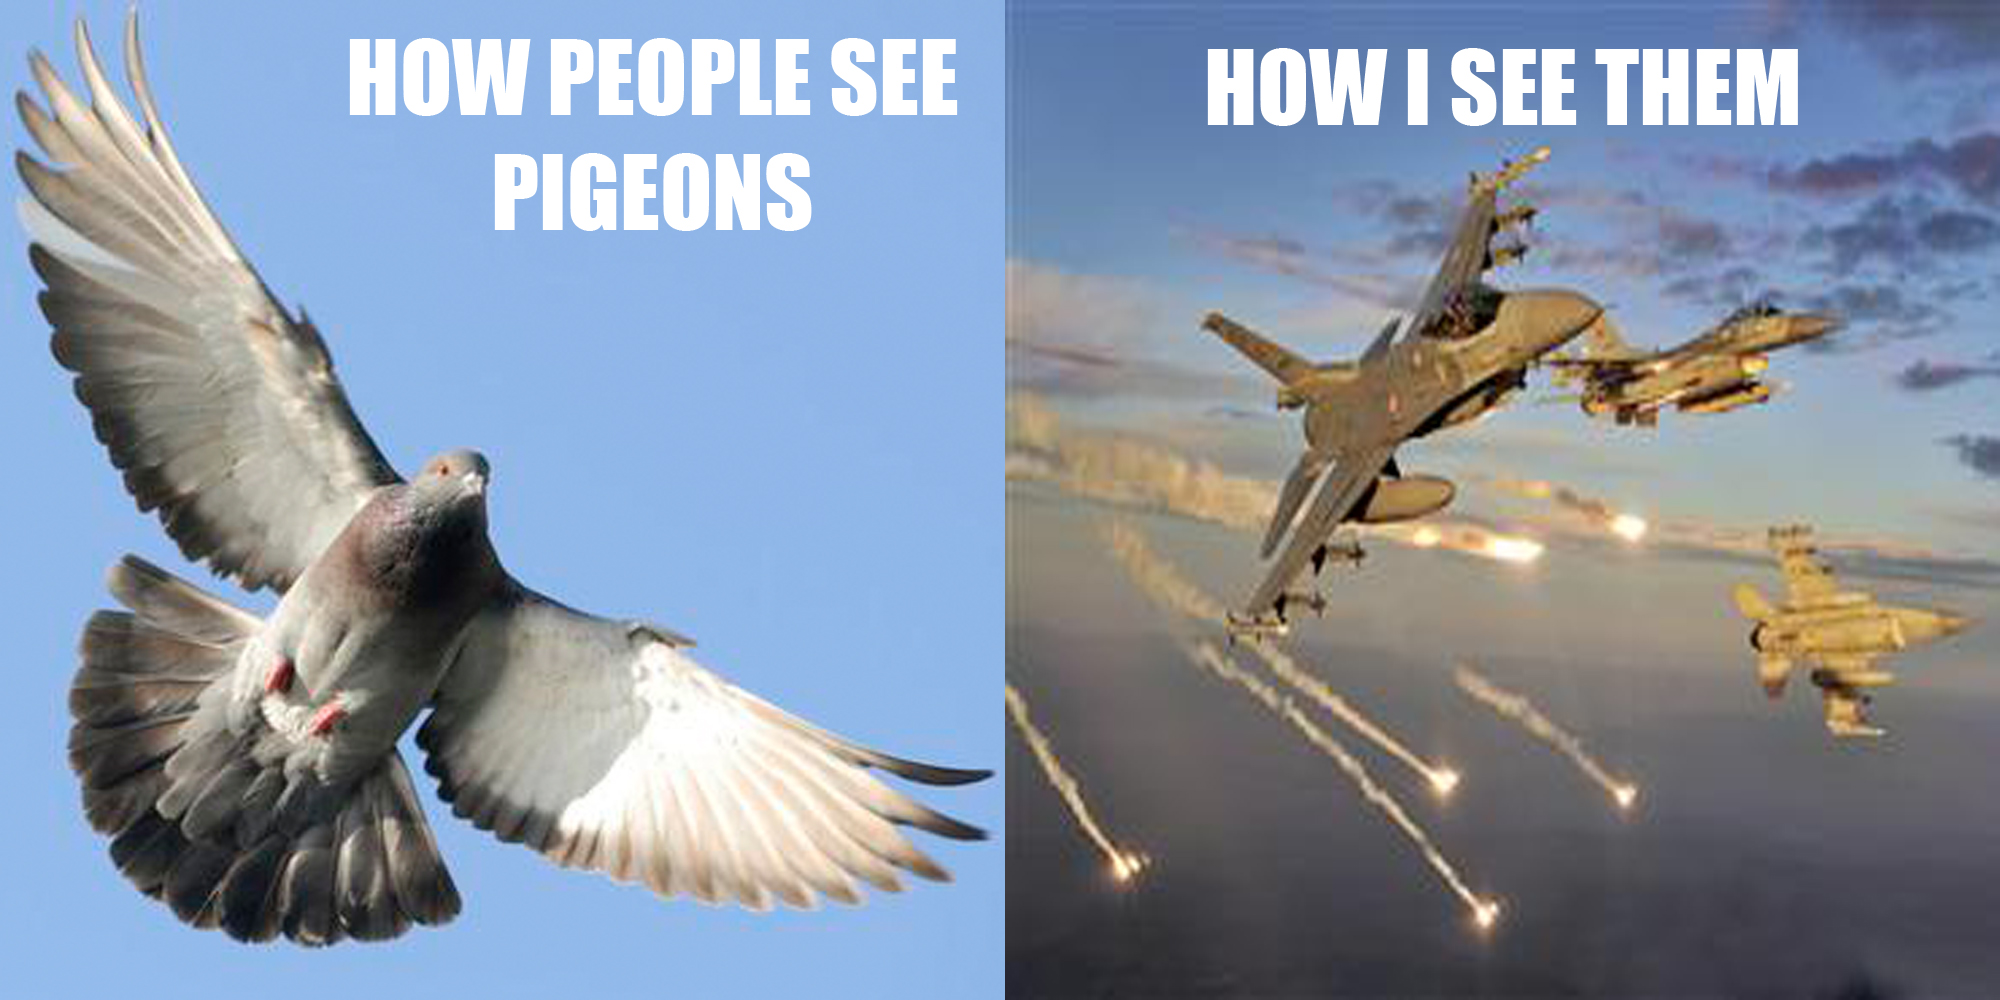 Pigeon Strike